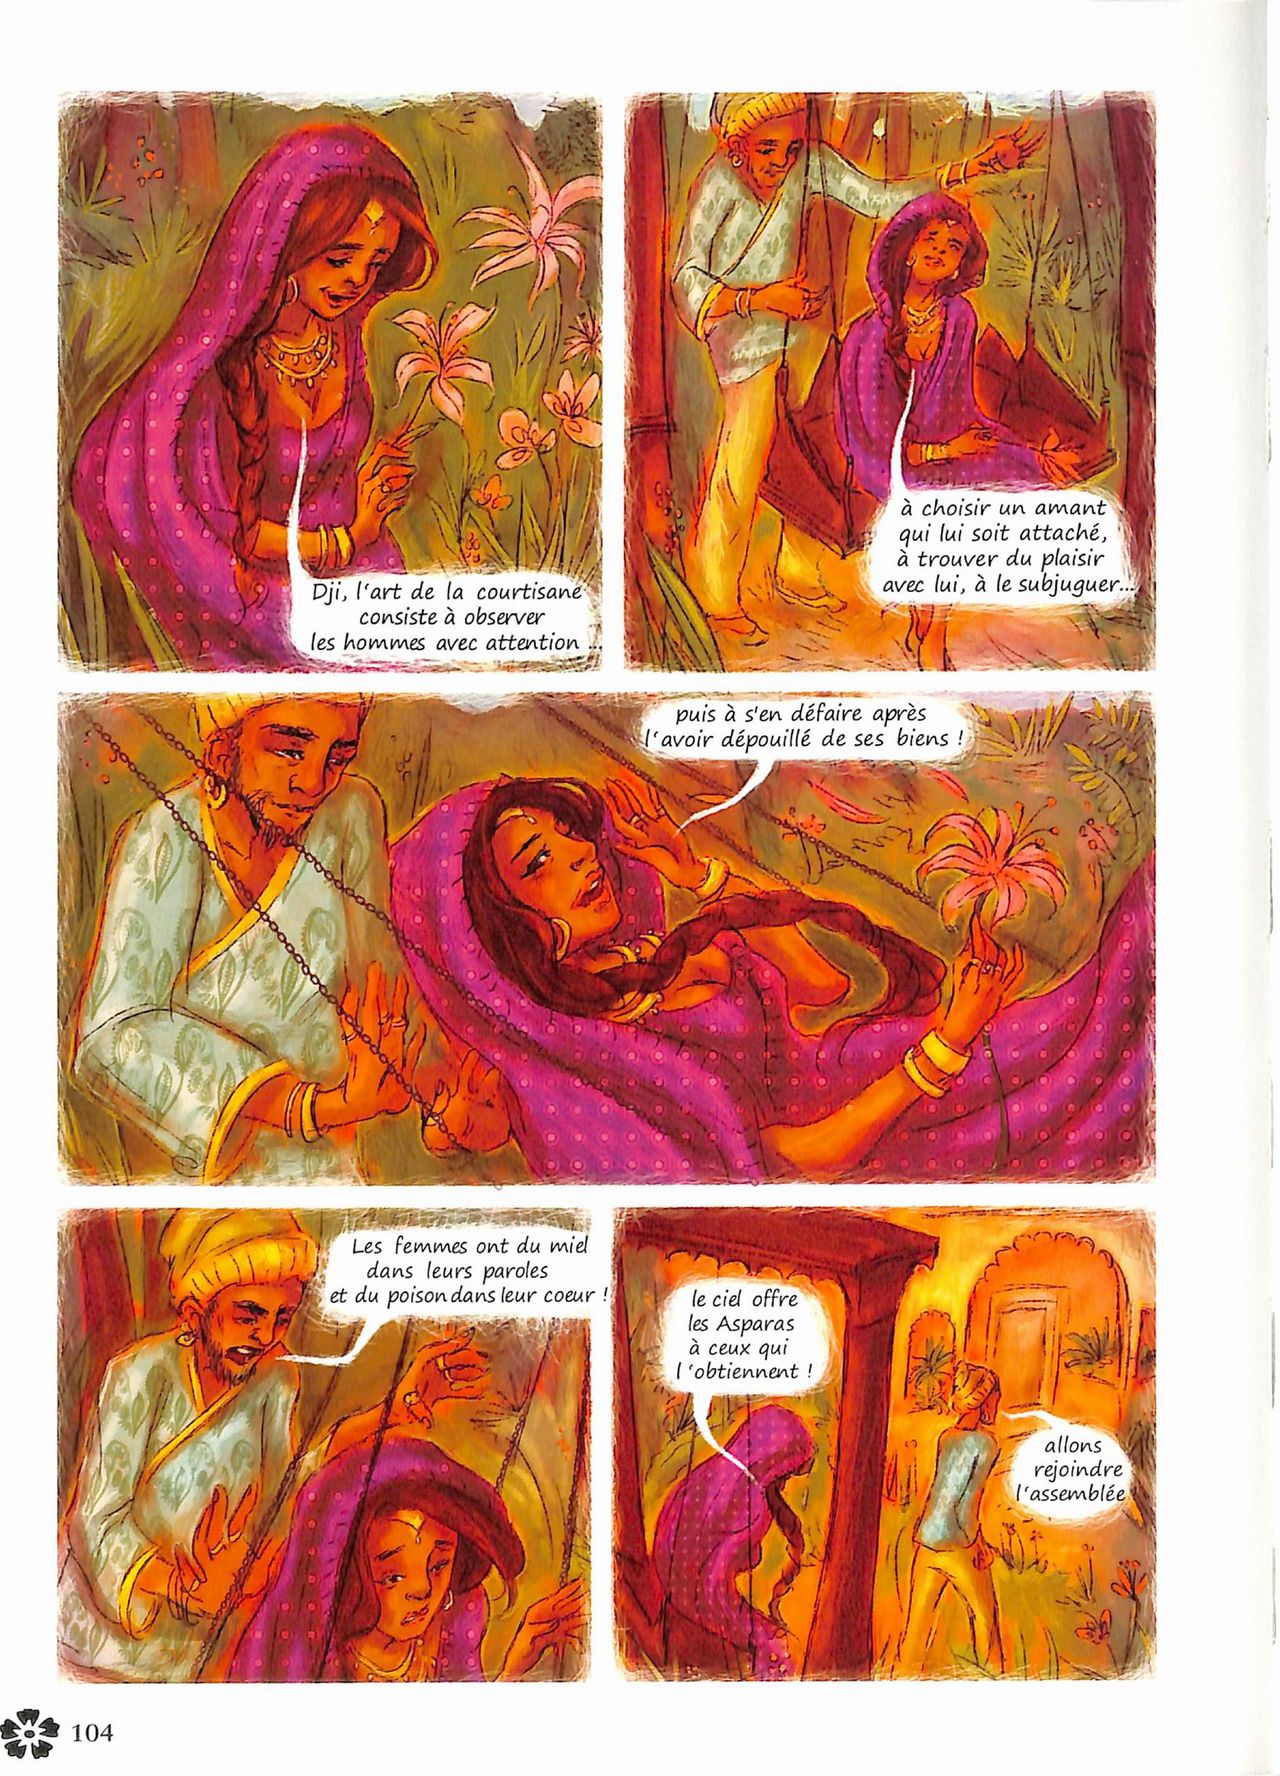 Kama Sutra en bandes dessinées - Kama Sutra with Comics numero d'image 105